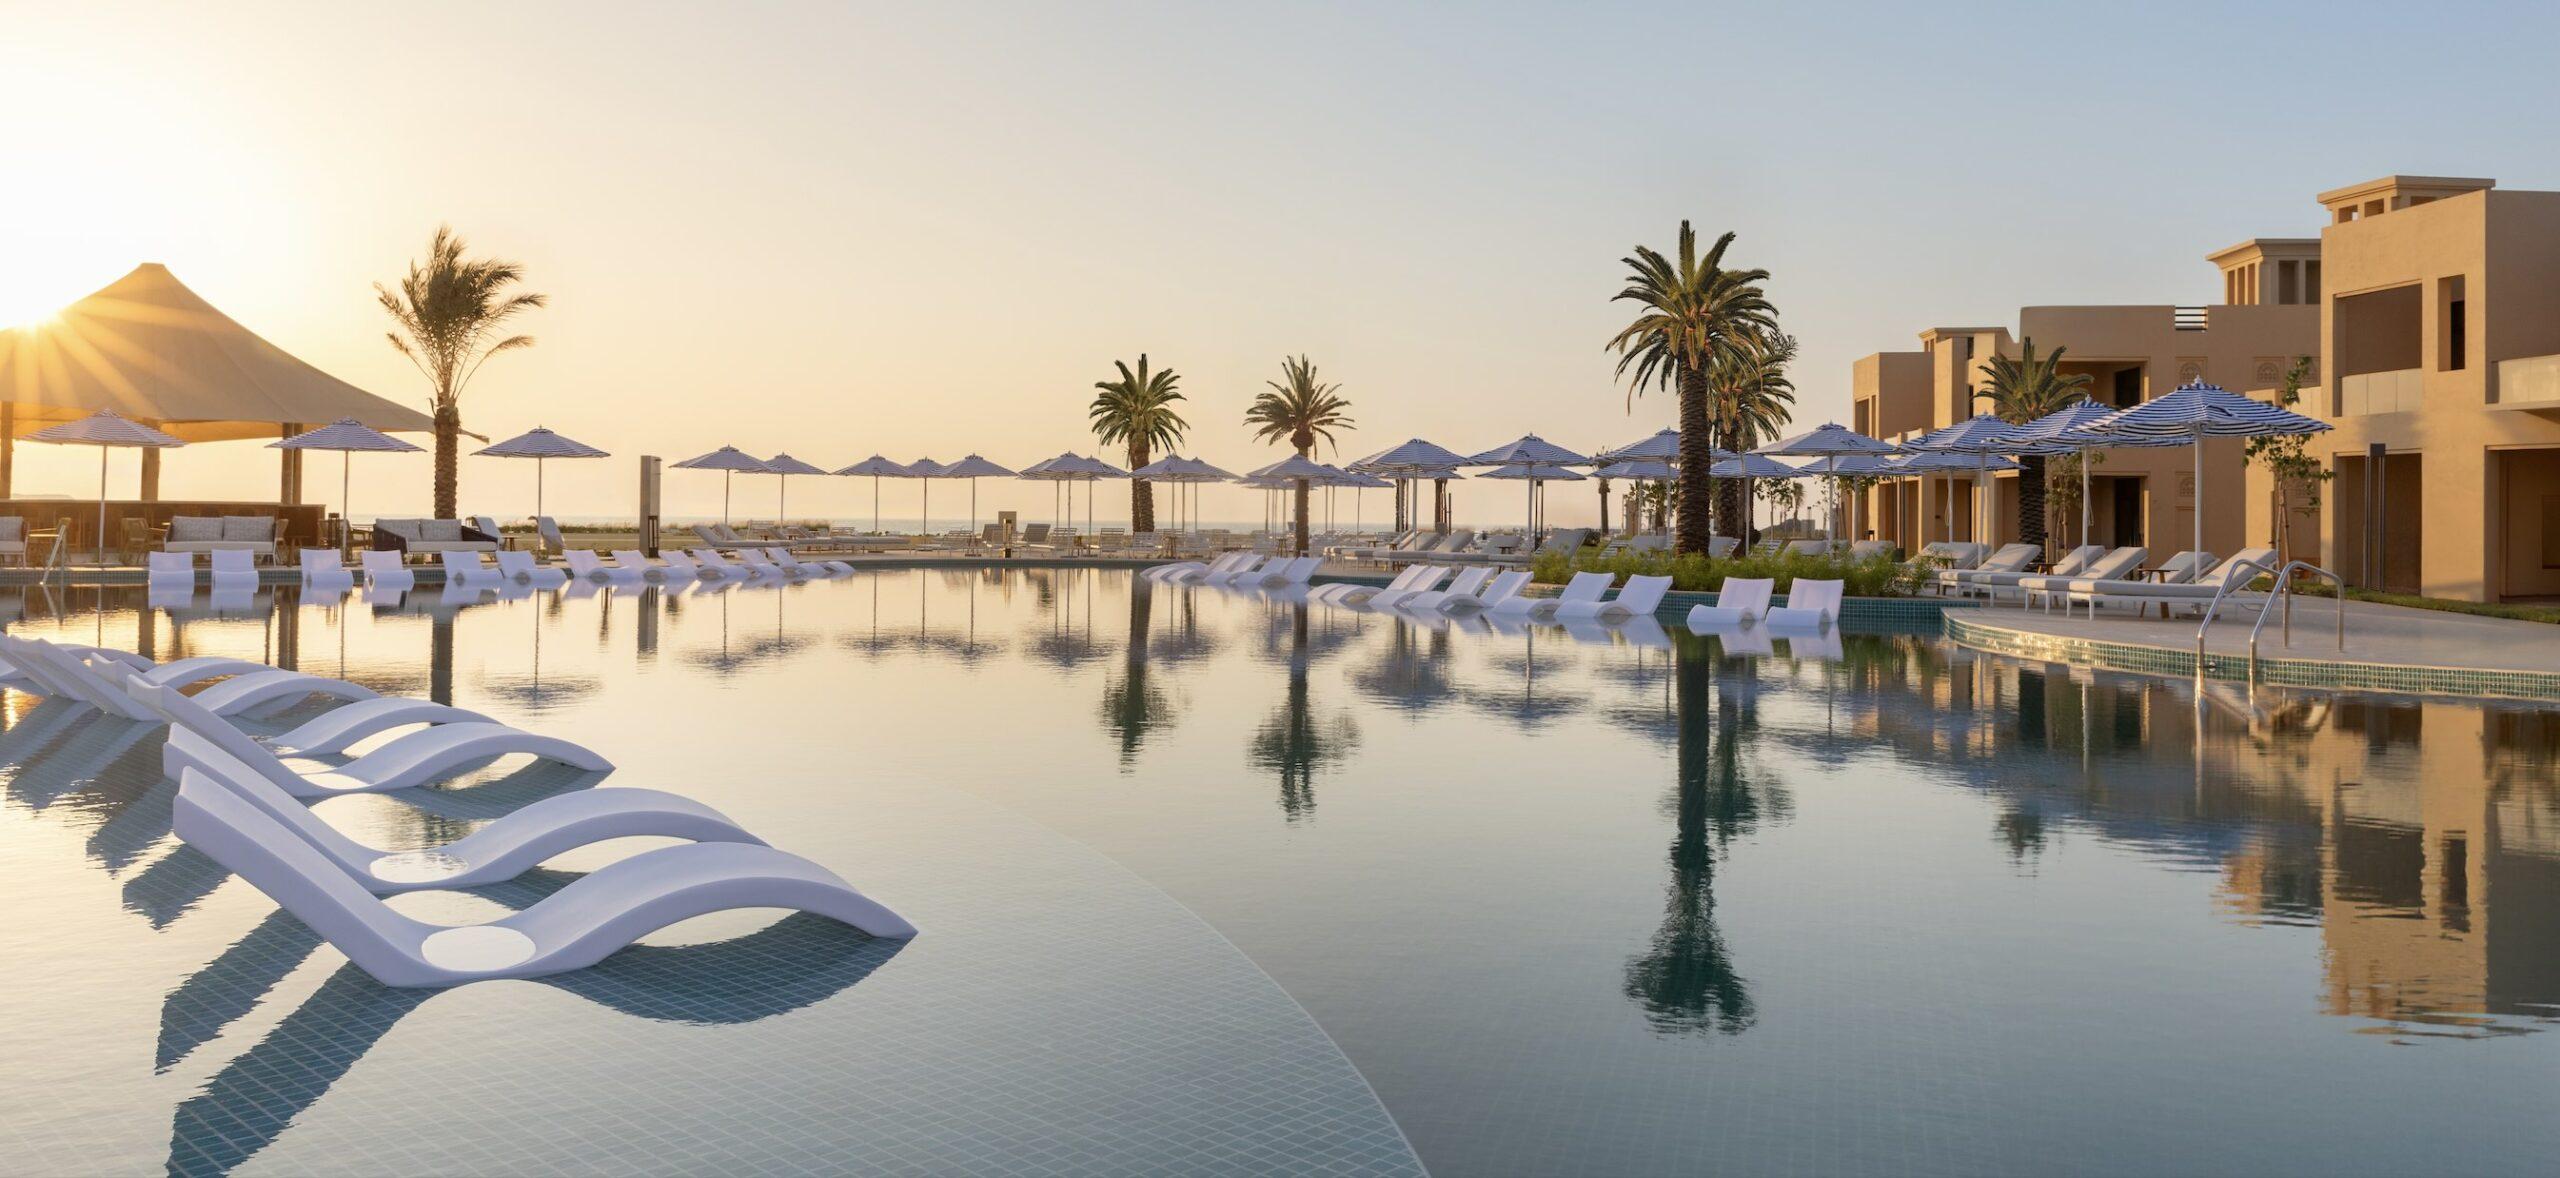 Sofitel Al Hamra Beach Resort is opening this month